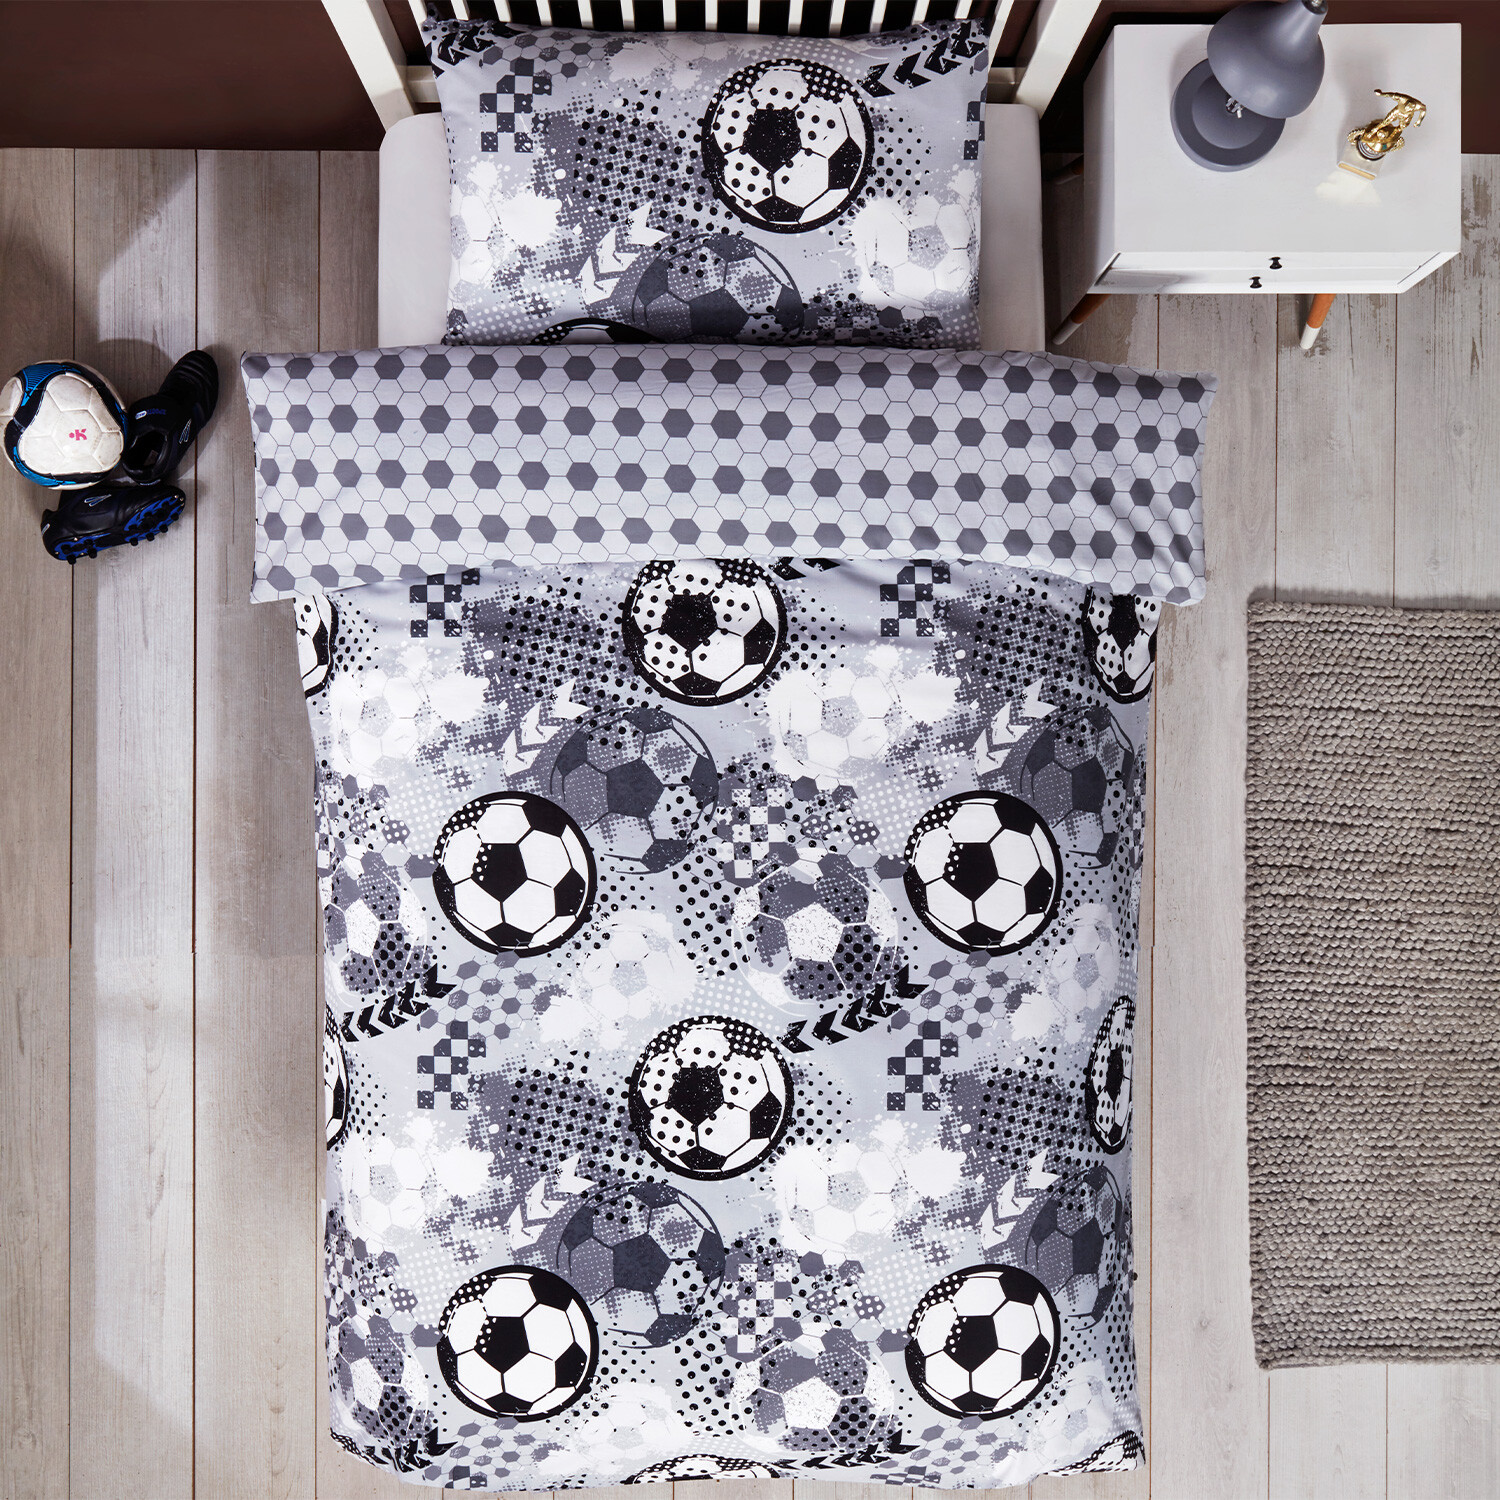 Football Duvet Cover and Pillowcase Set - Grey Image 4